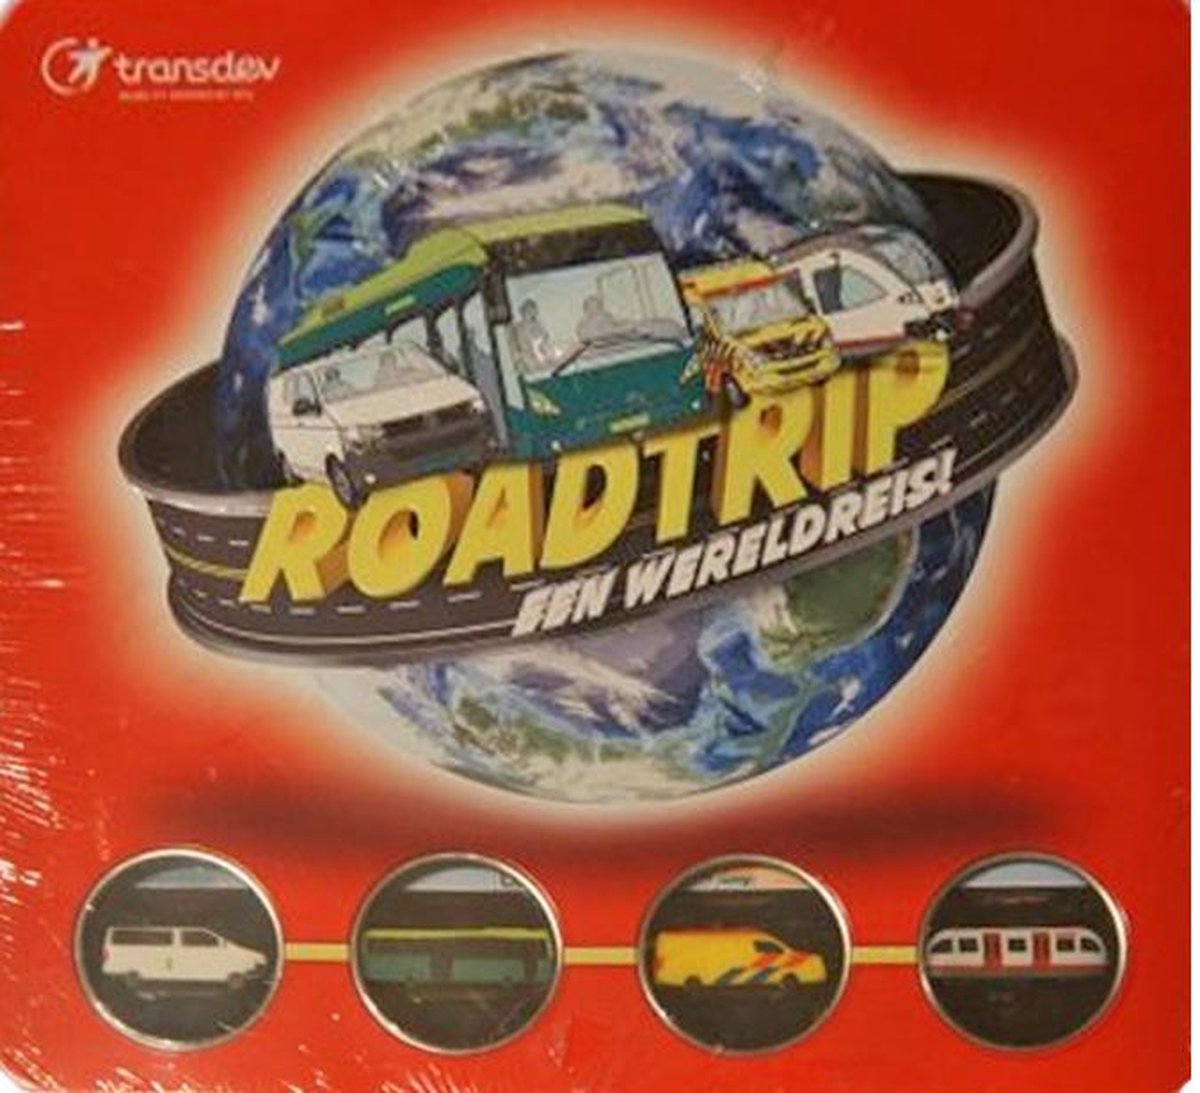 Roadtrip een wereldreis! Identity games